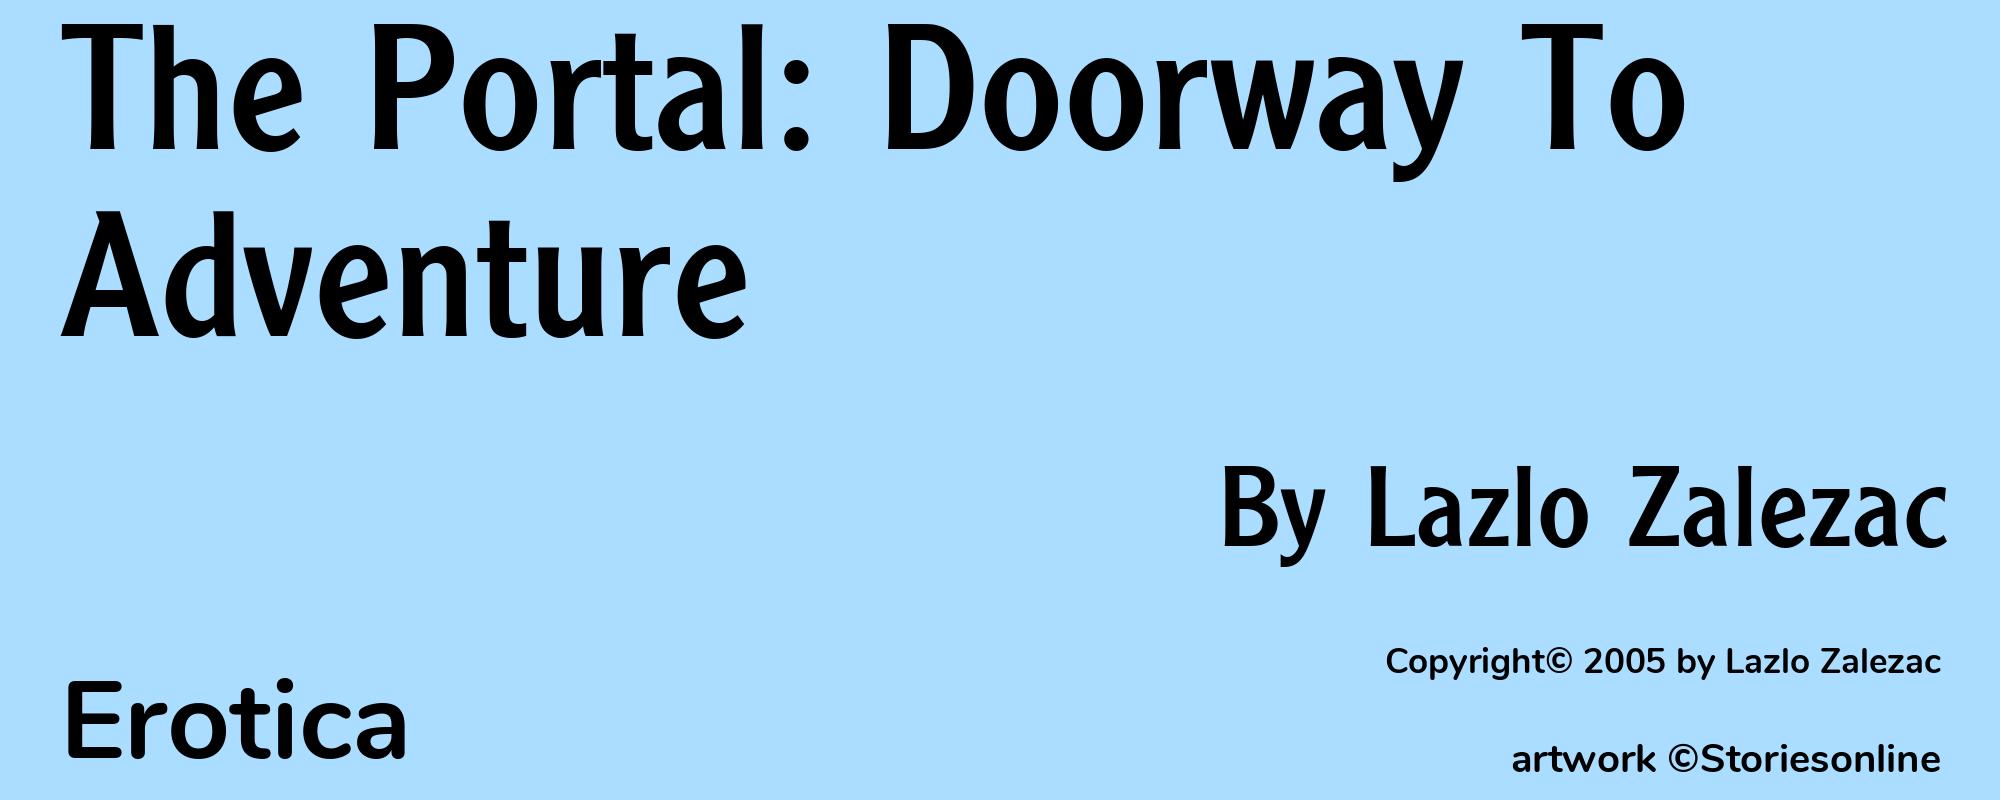 The Portal: Doorway To Adventure - Cover